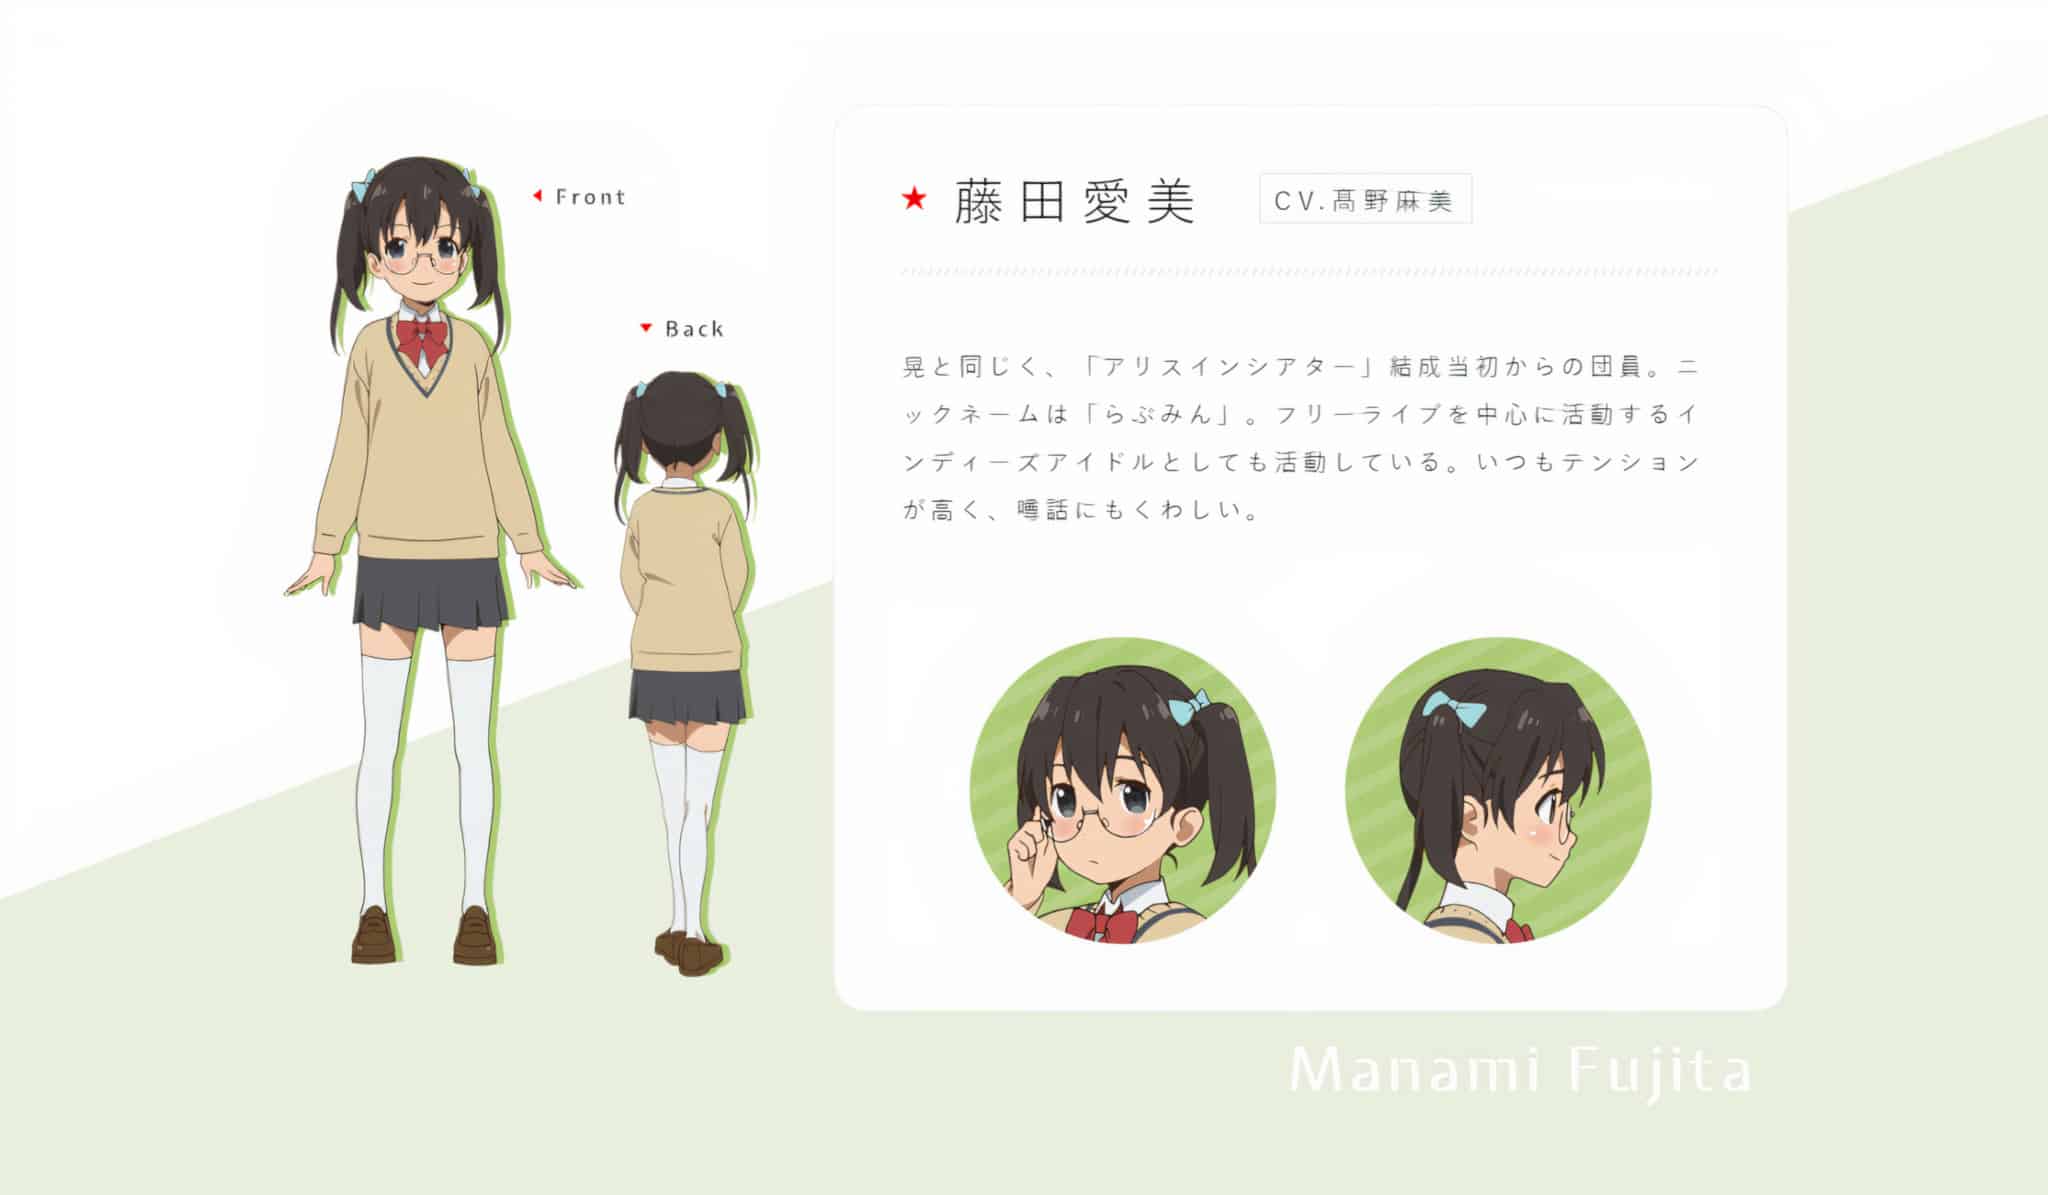 Design de Manami Fujita dans anime Gekidol